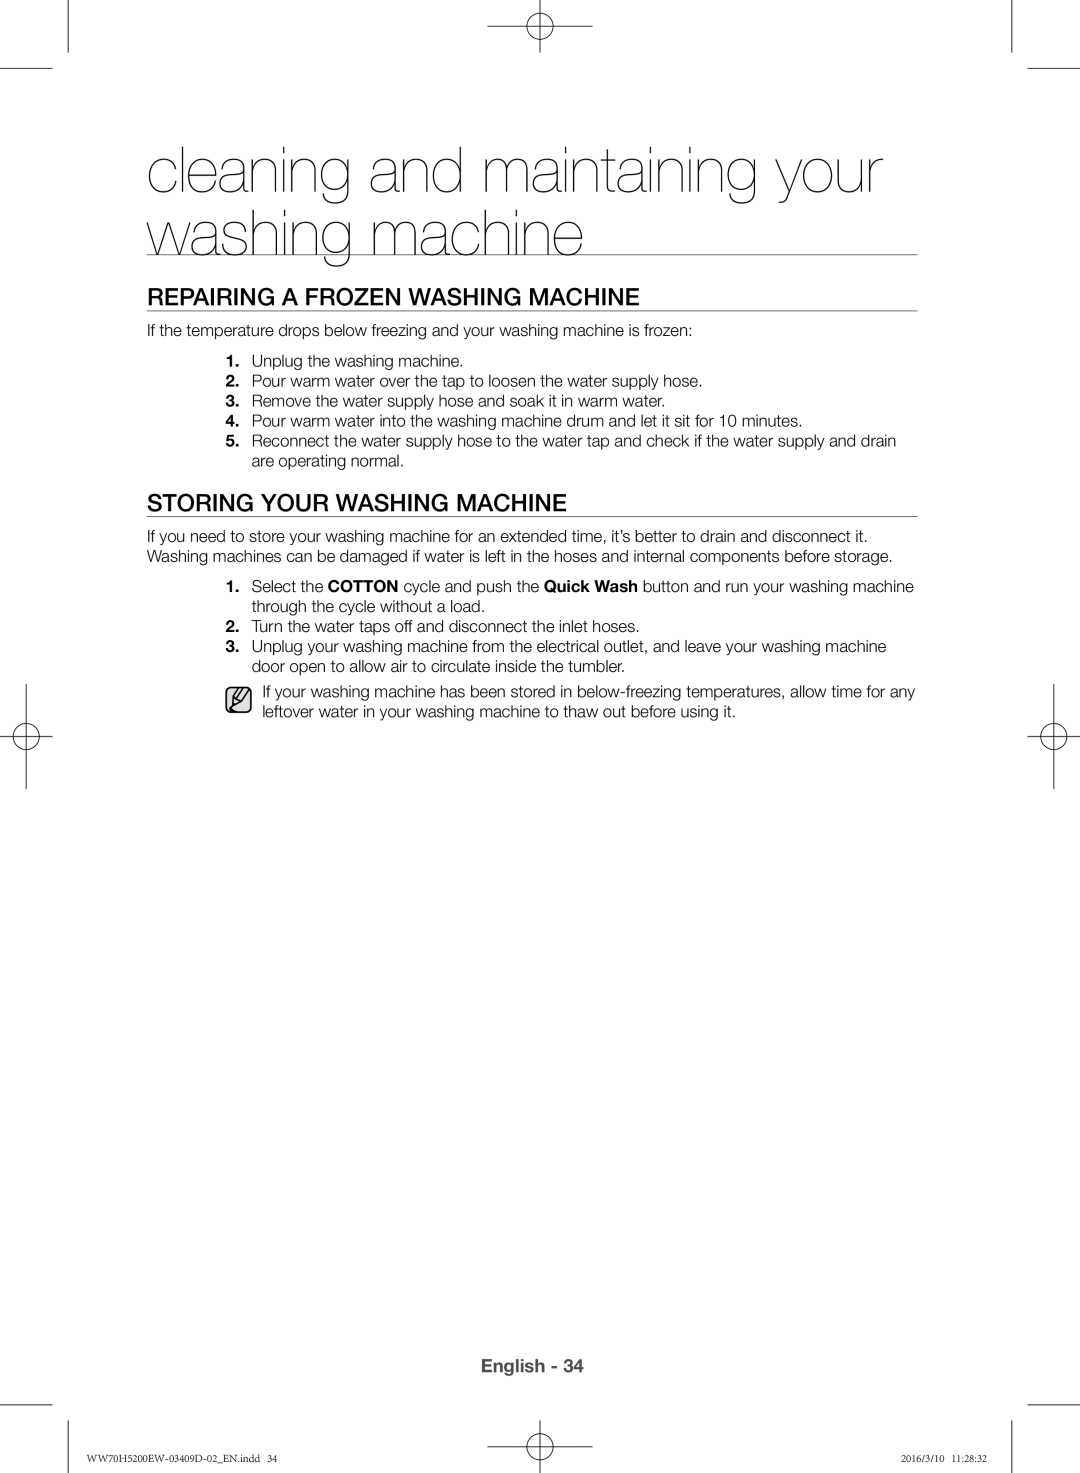 Samsung WW70H5200EW/KJ manual Repairing a frozen washing machine, Storing your washing machine 